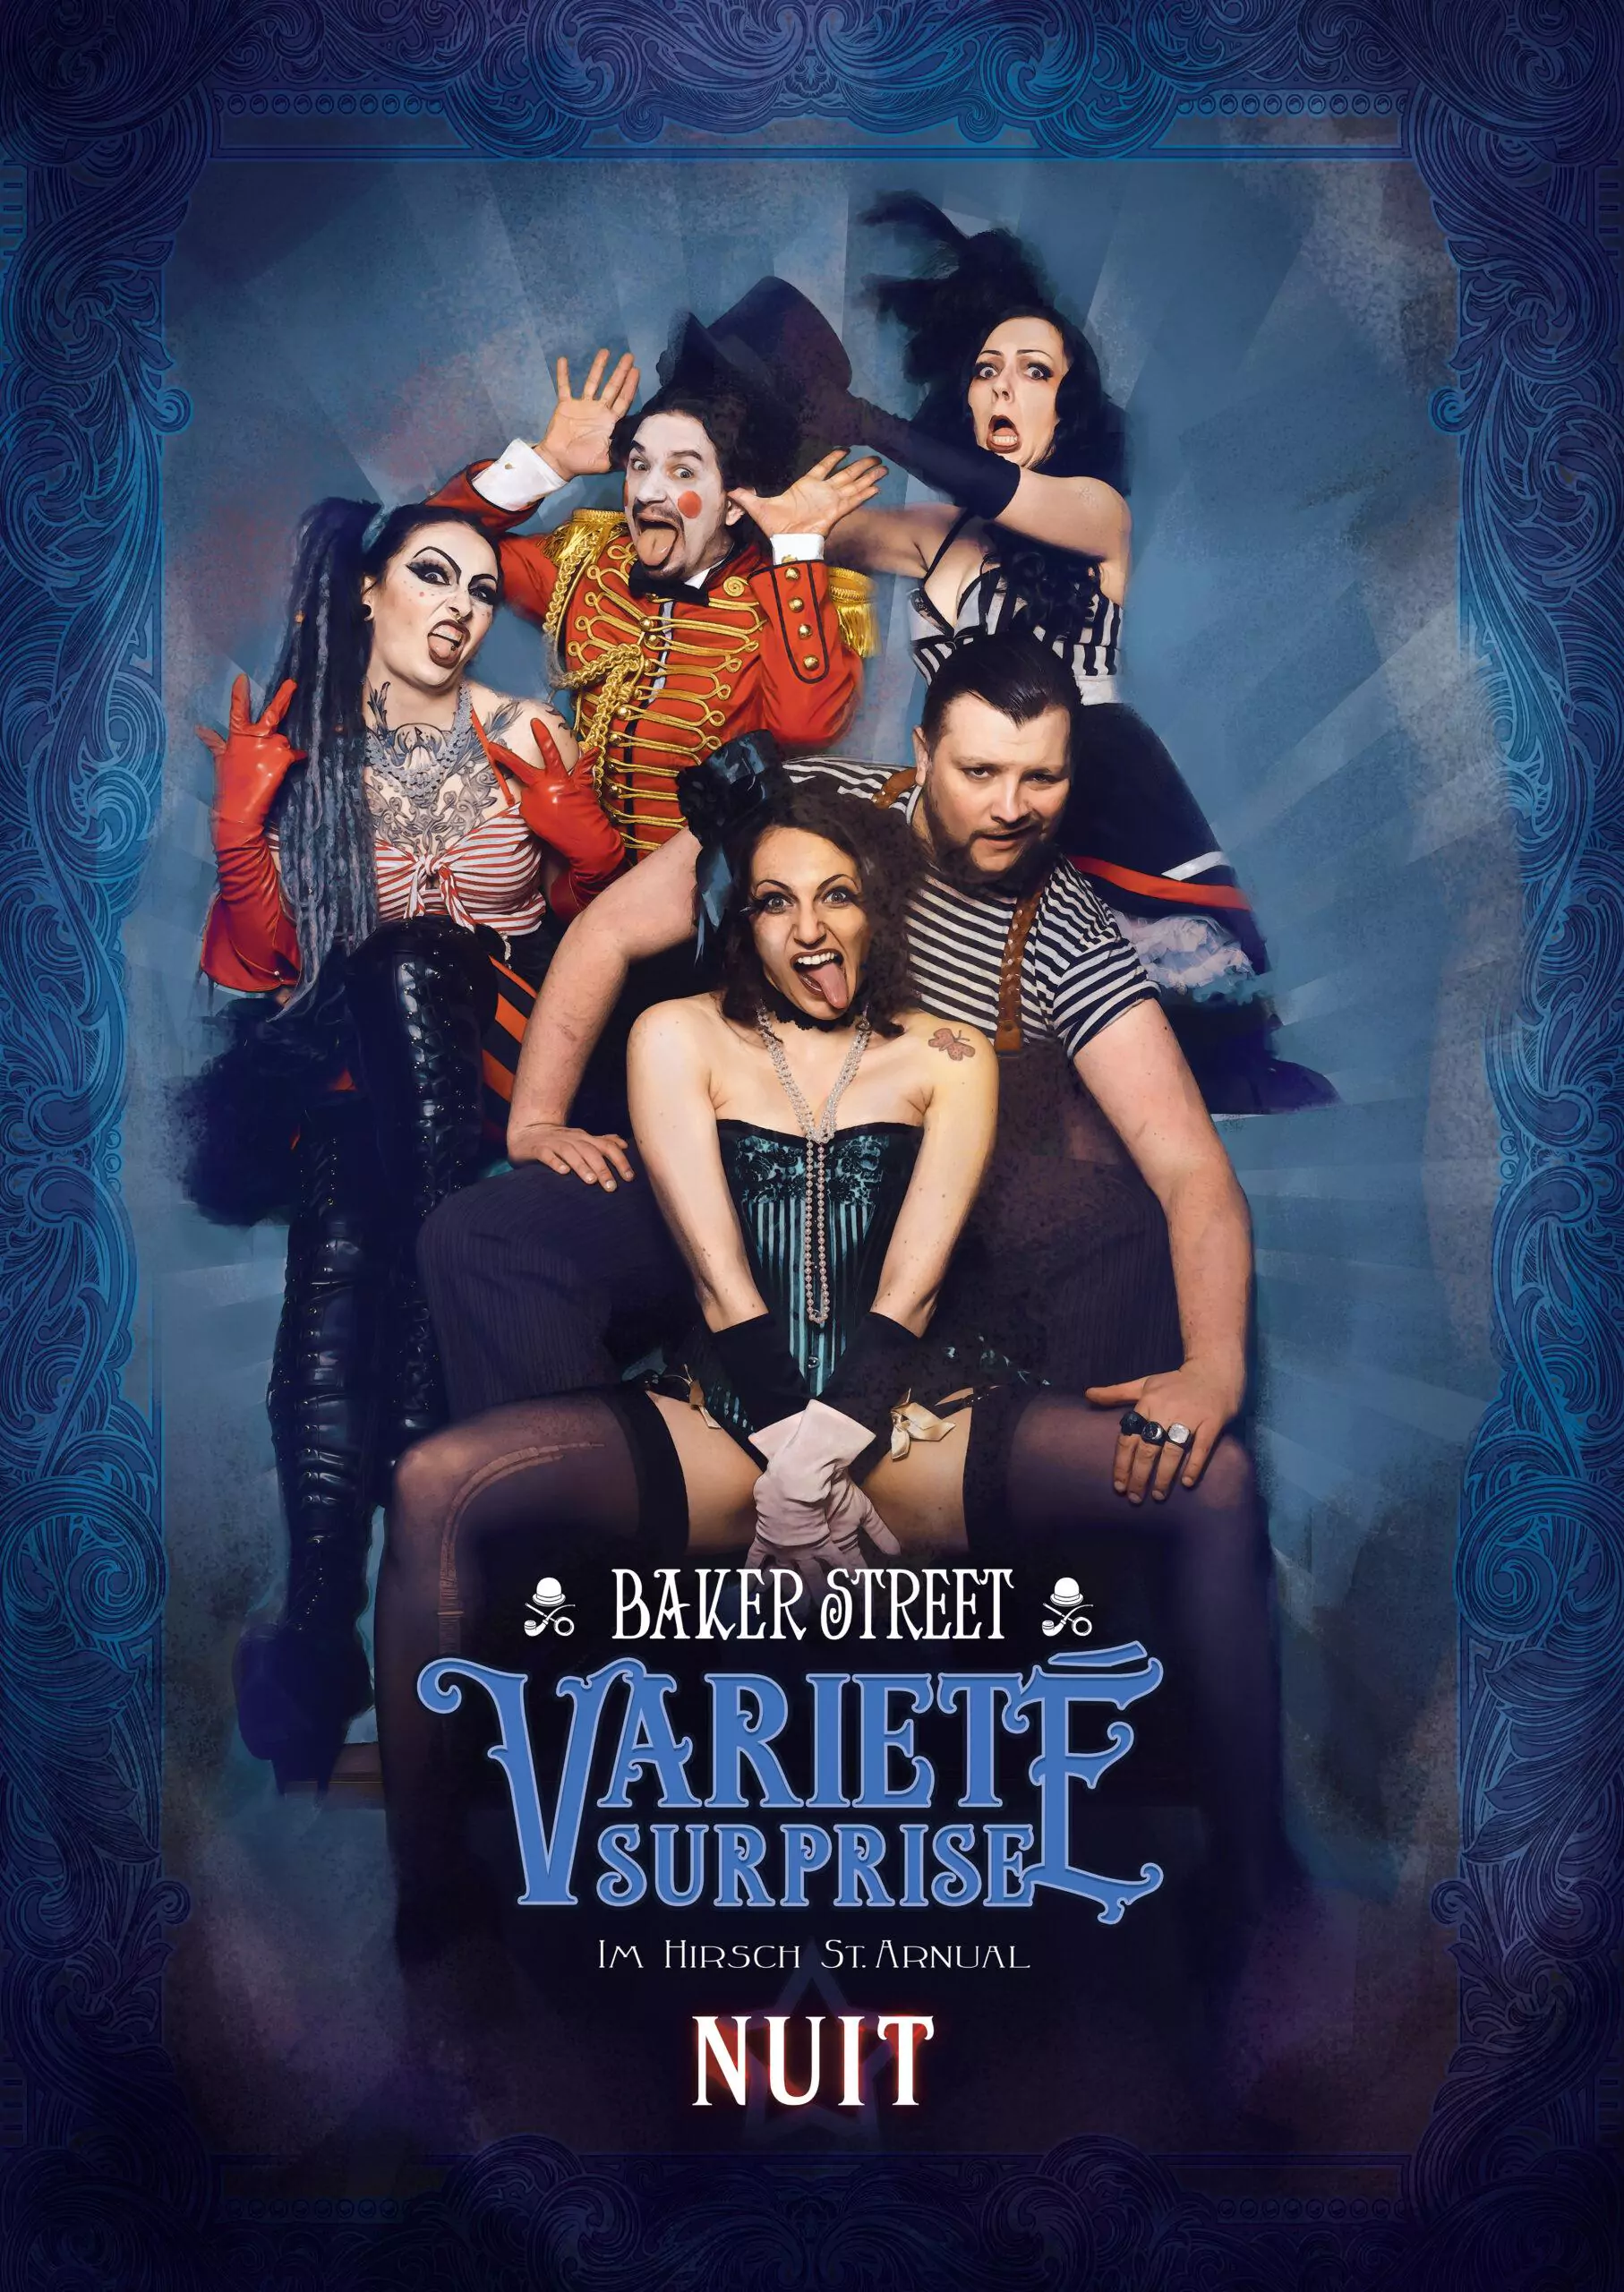 Plakat Bakerstreet Variete surprise nuit 1